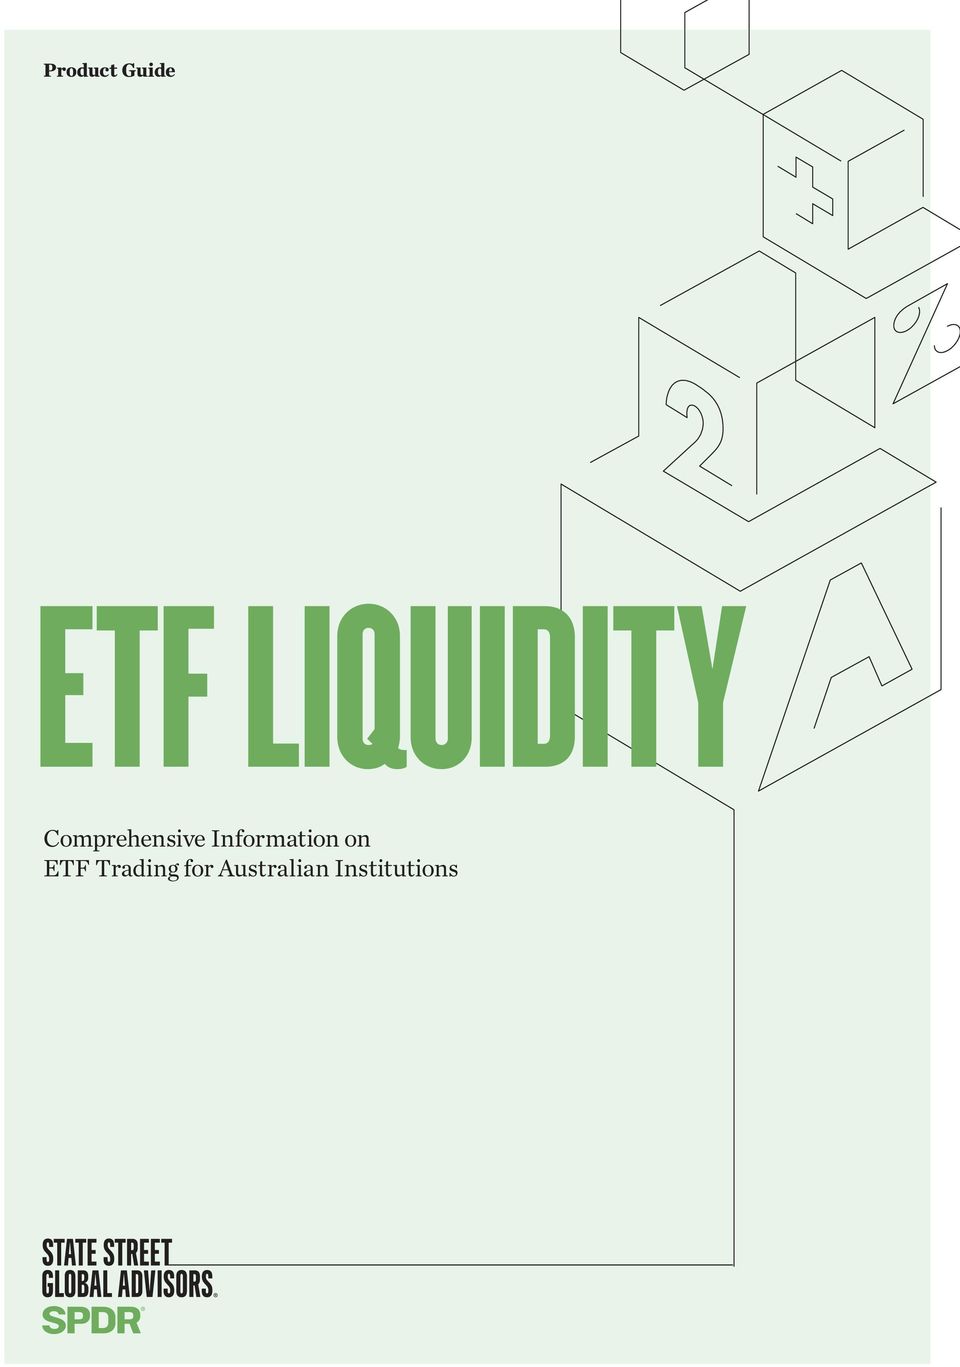 Information on ETF